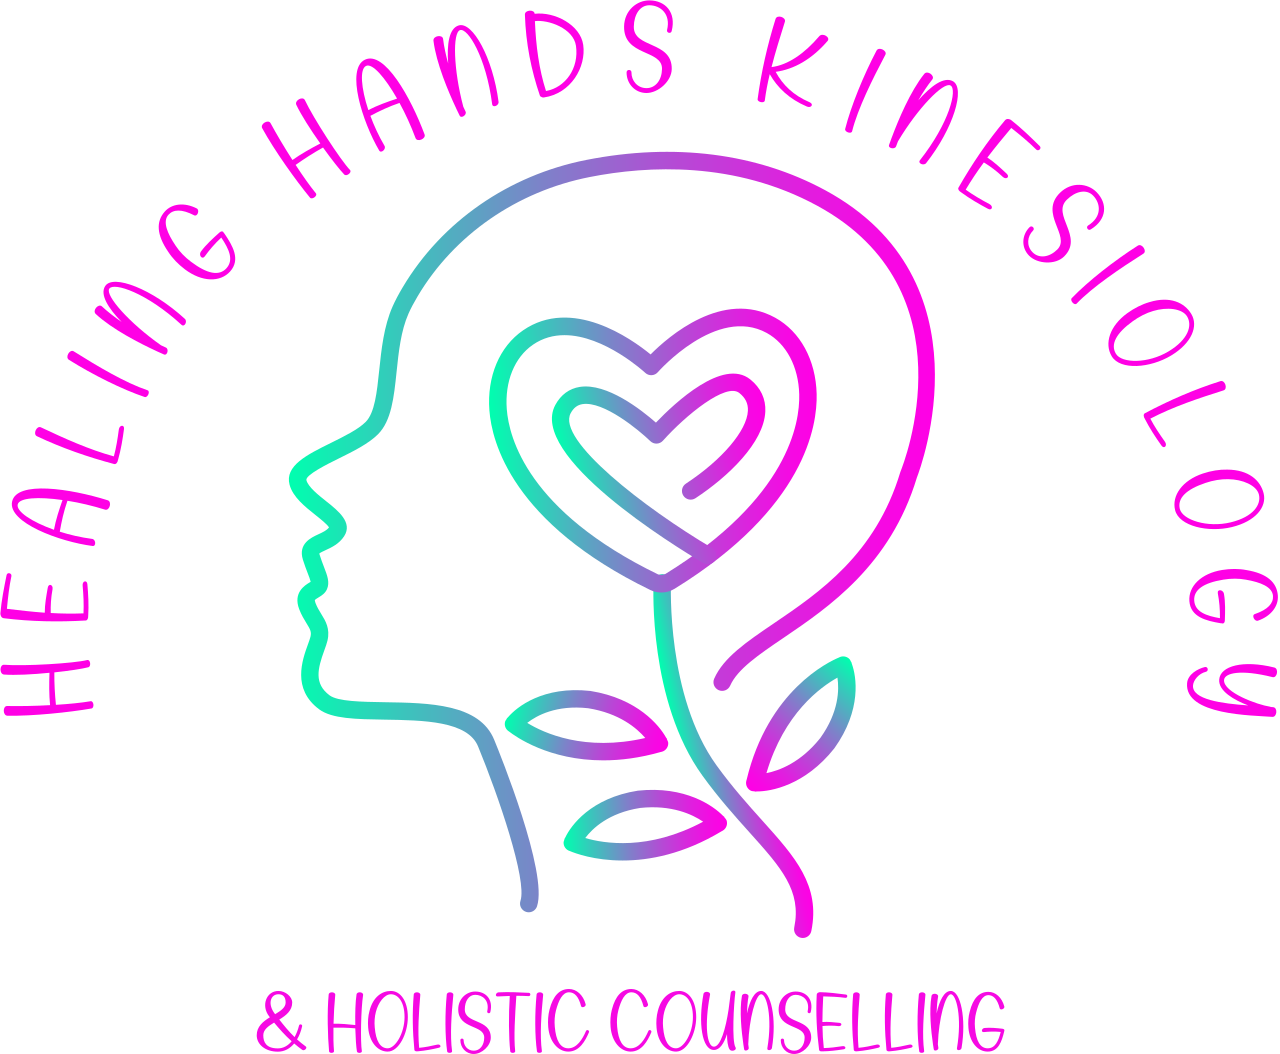 HEALING HANDS KINESIOLOGY's logo